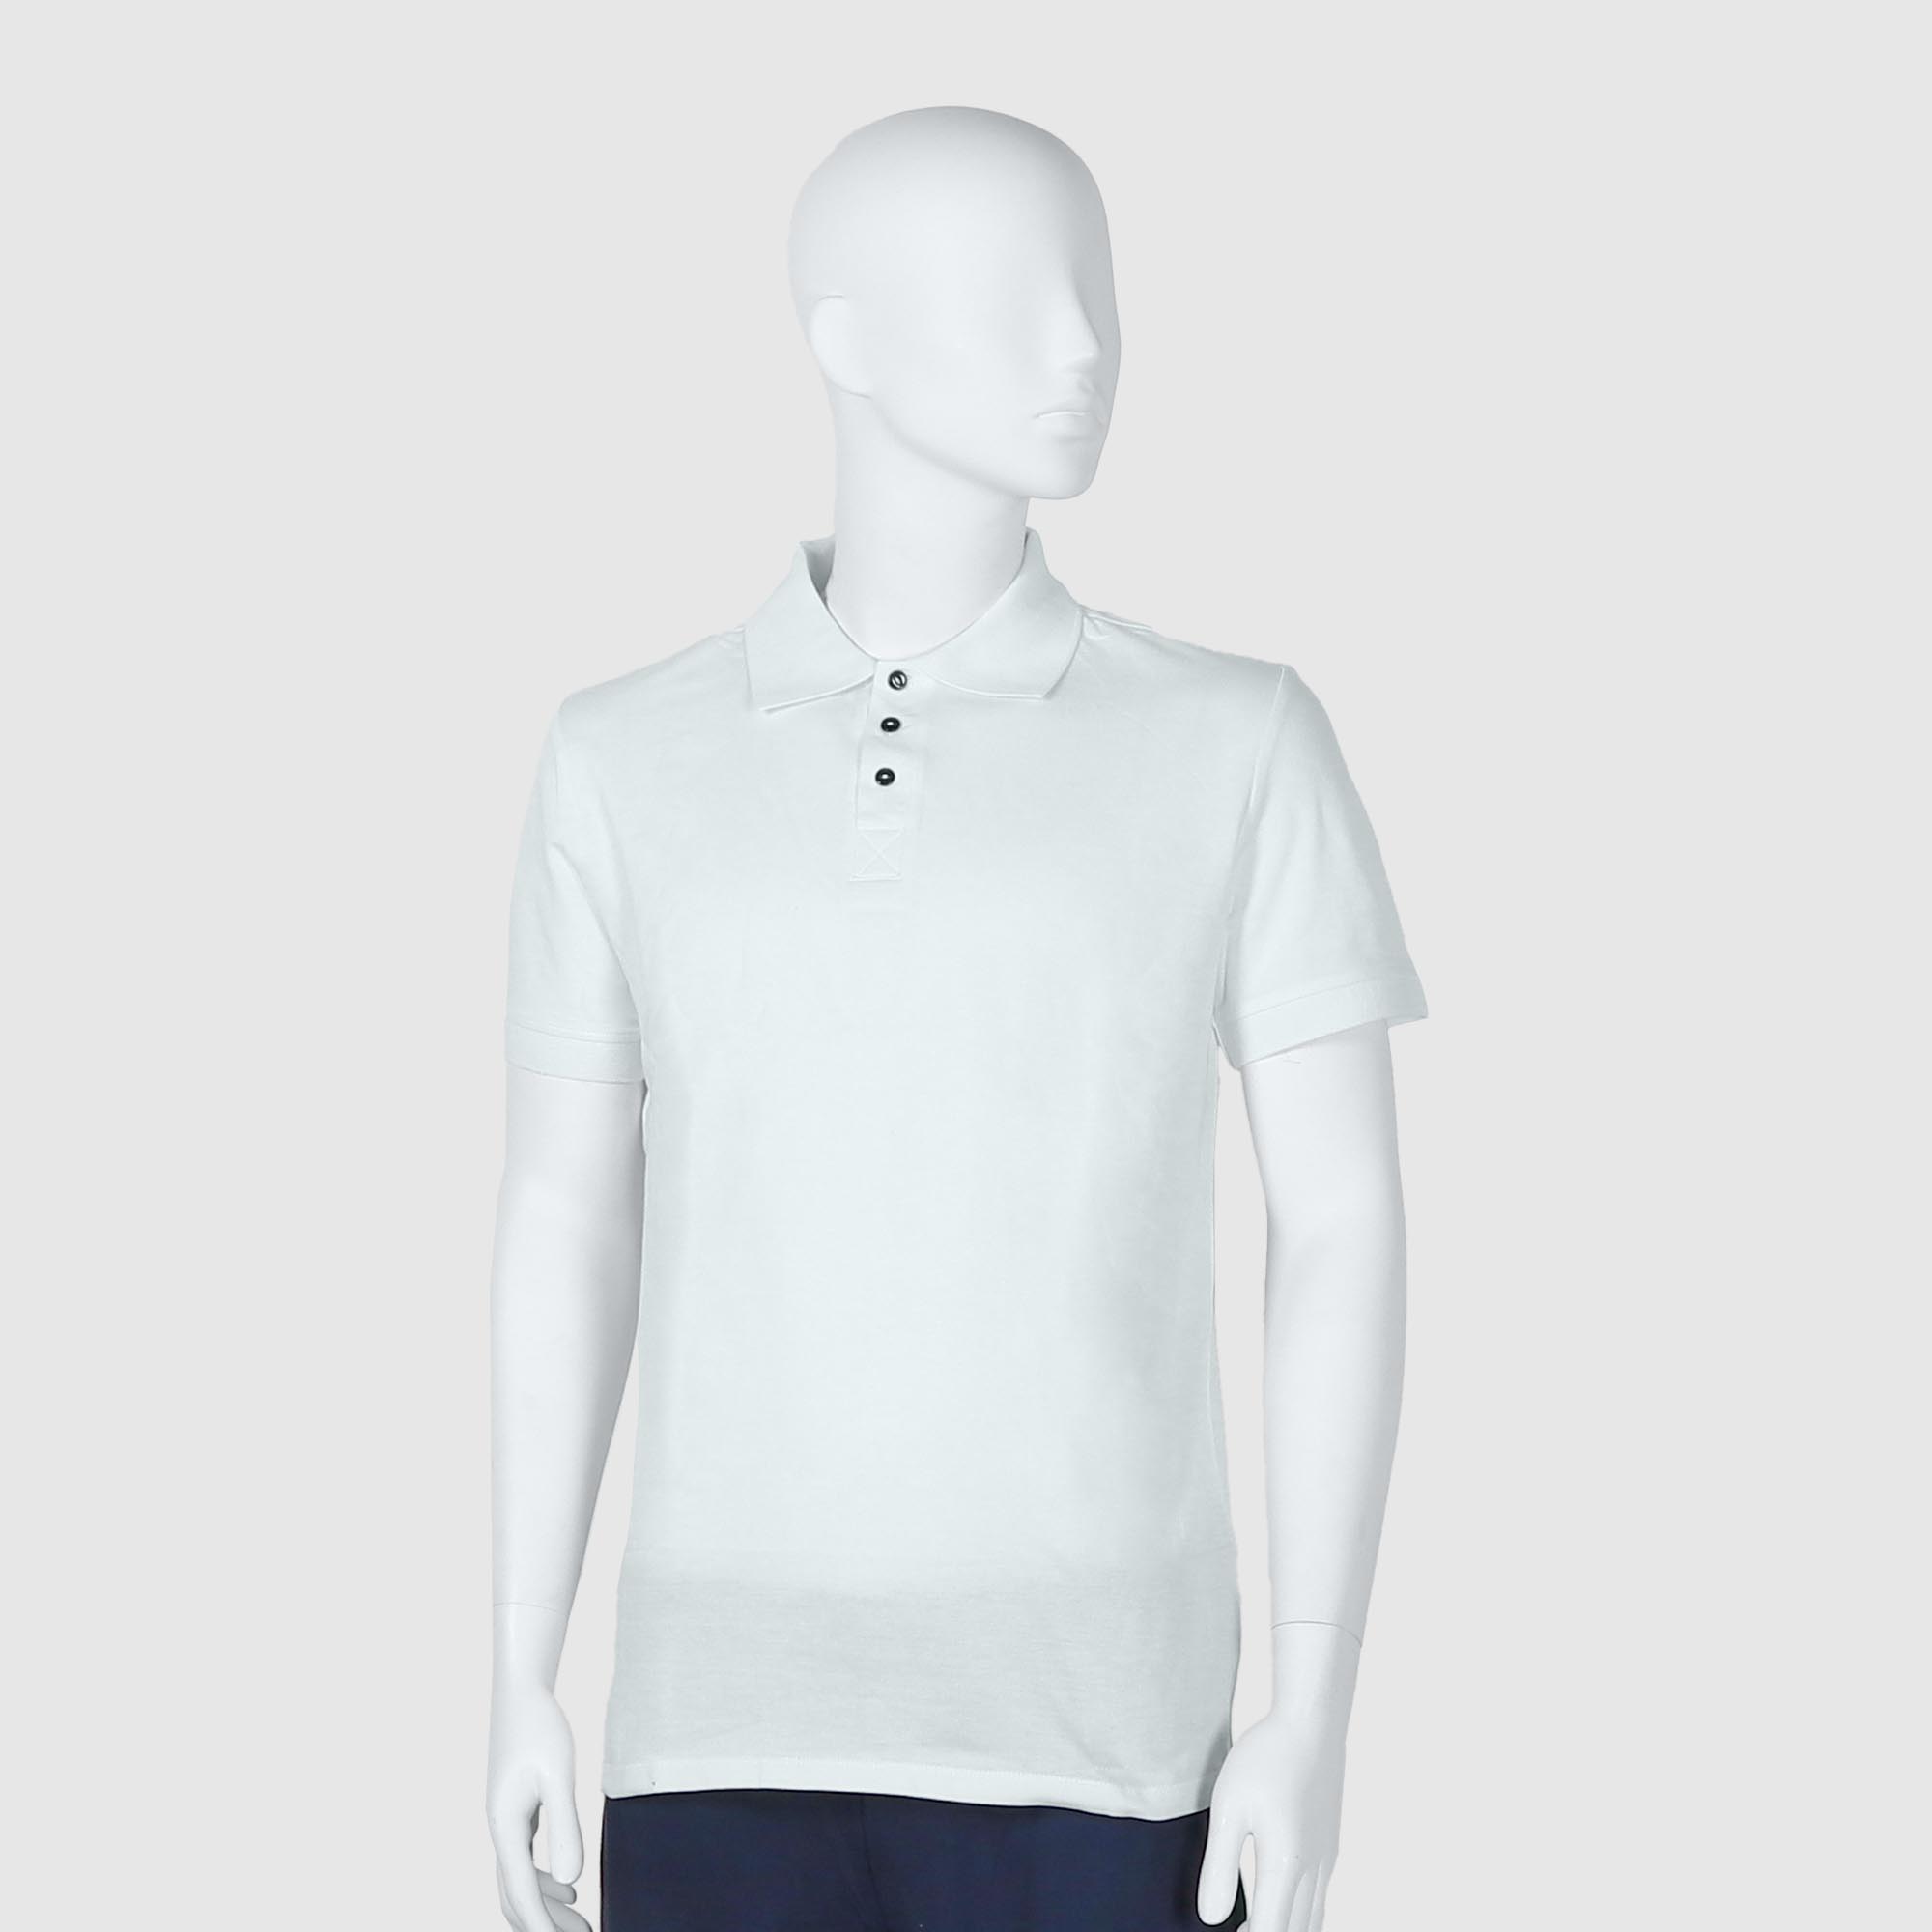 Мужская футболка-поло Diva Teks белая (DTD-07), цвет белый, размер 50-52